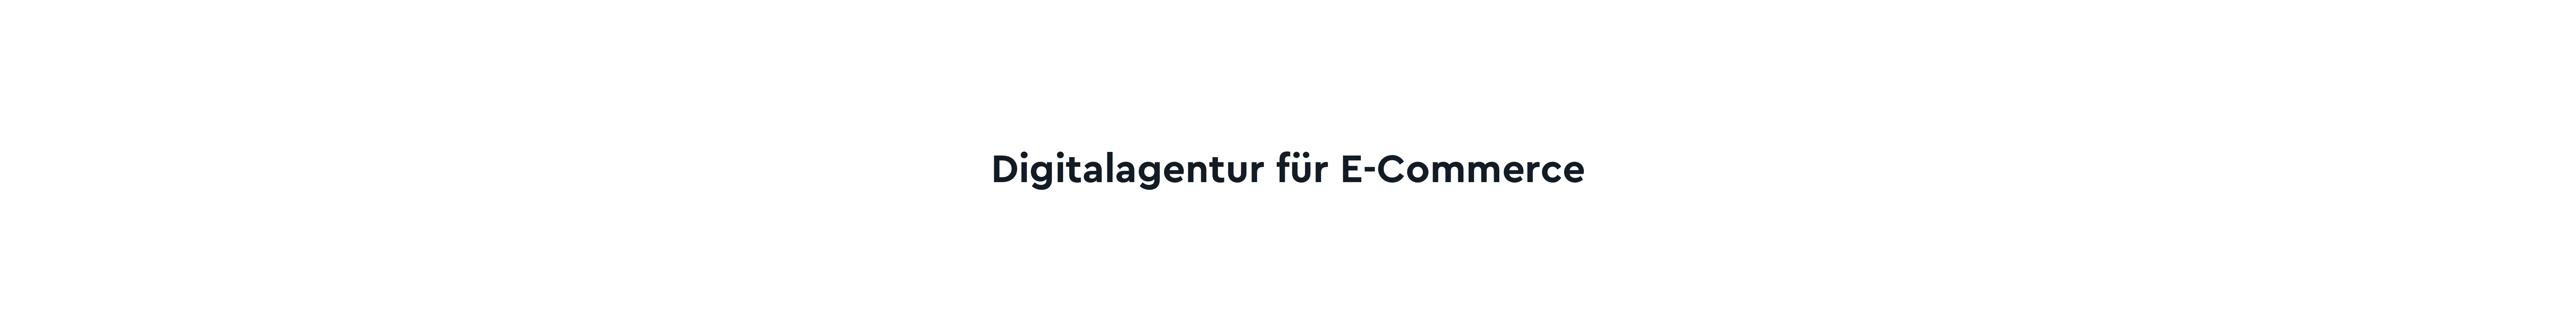 digital. manufaktur GmbH profil başlığı